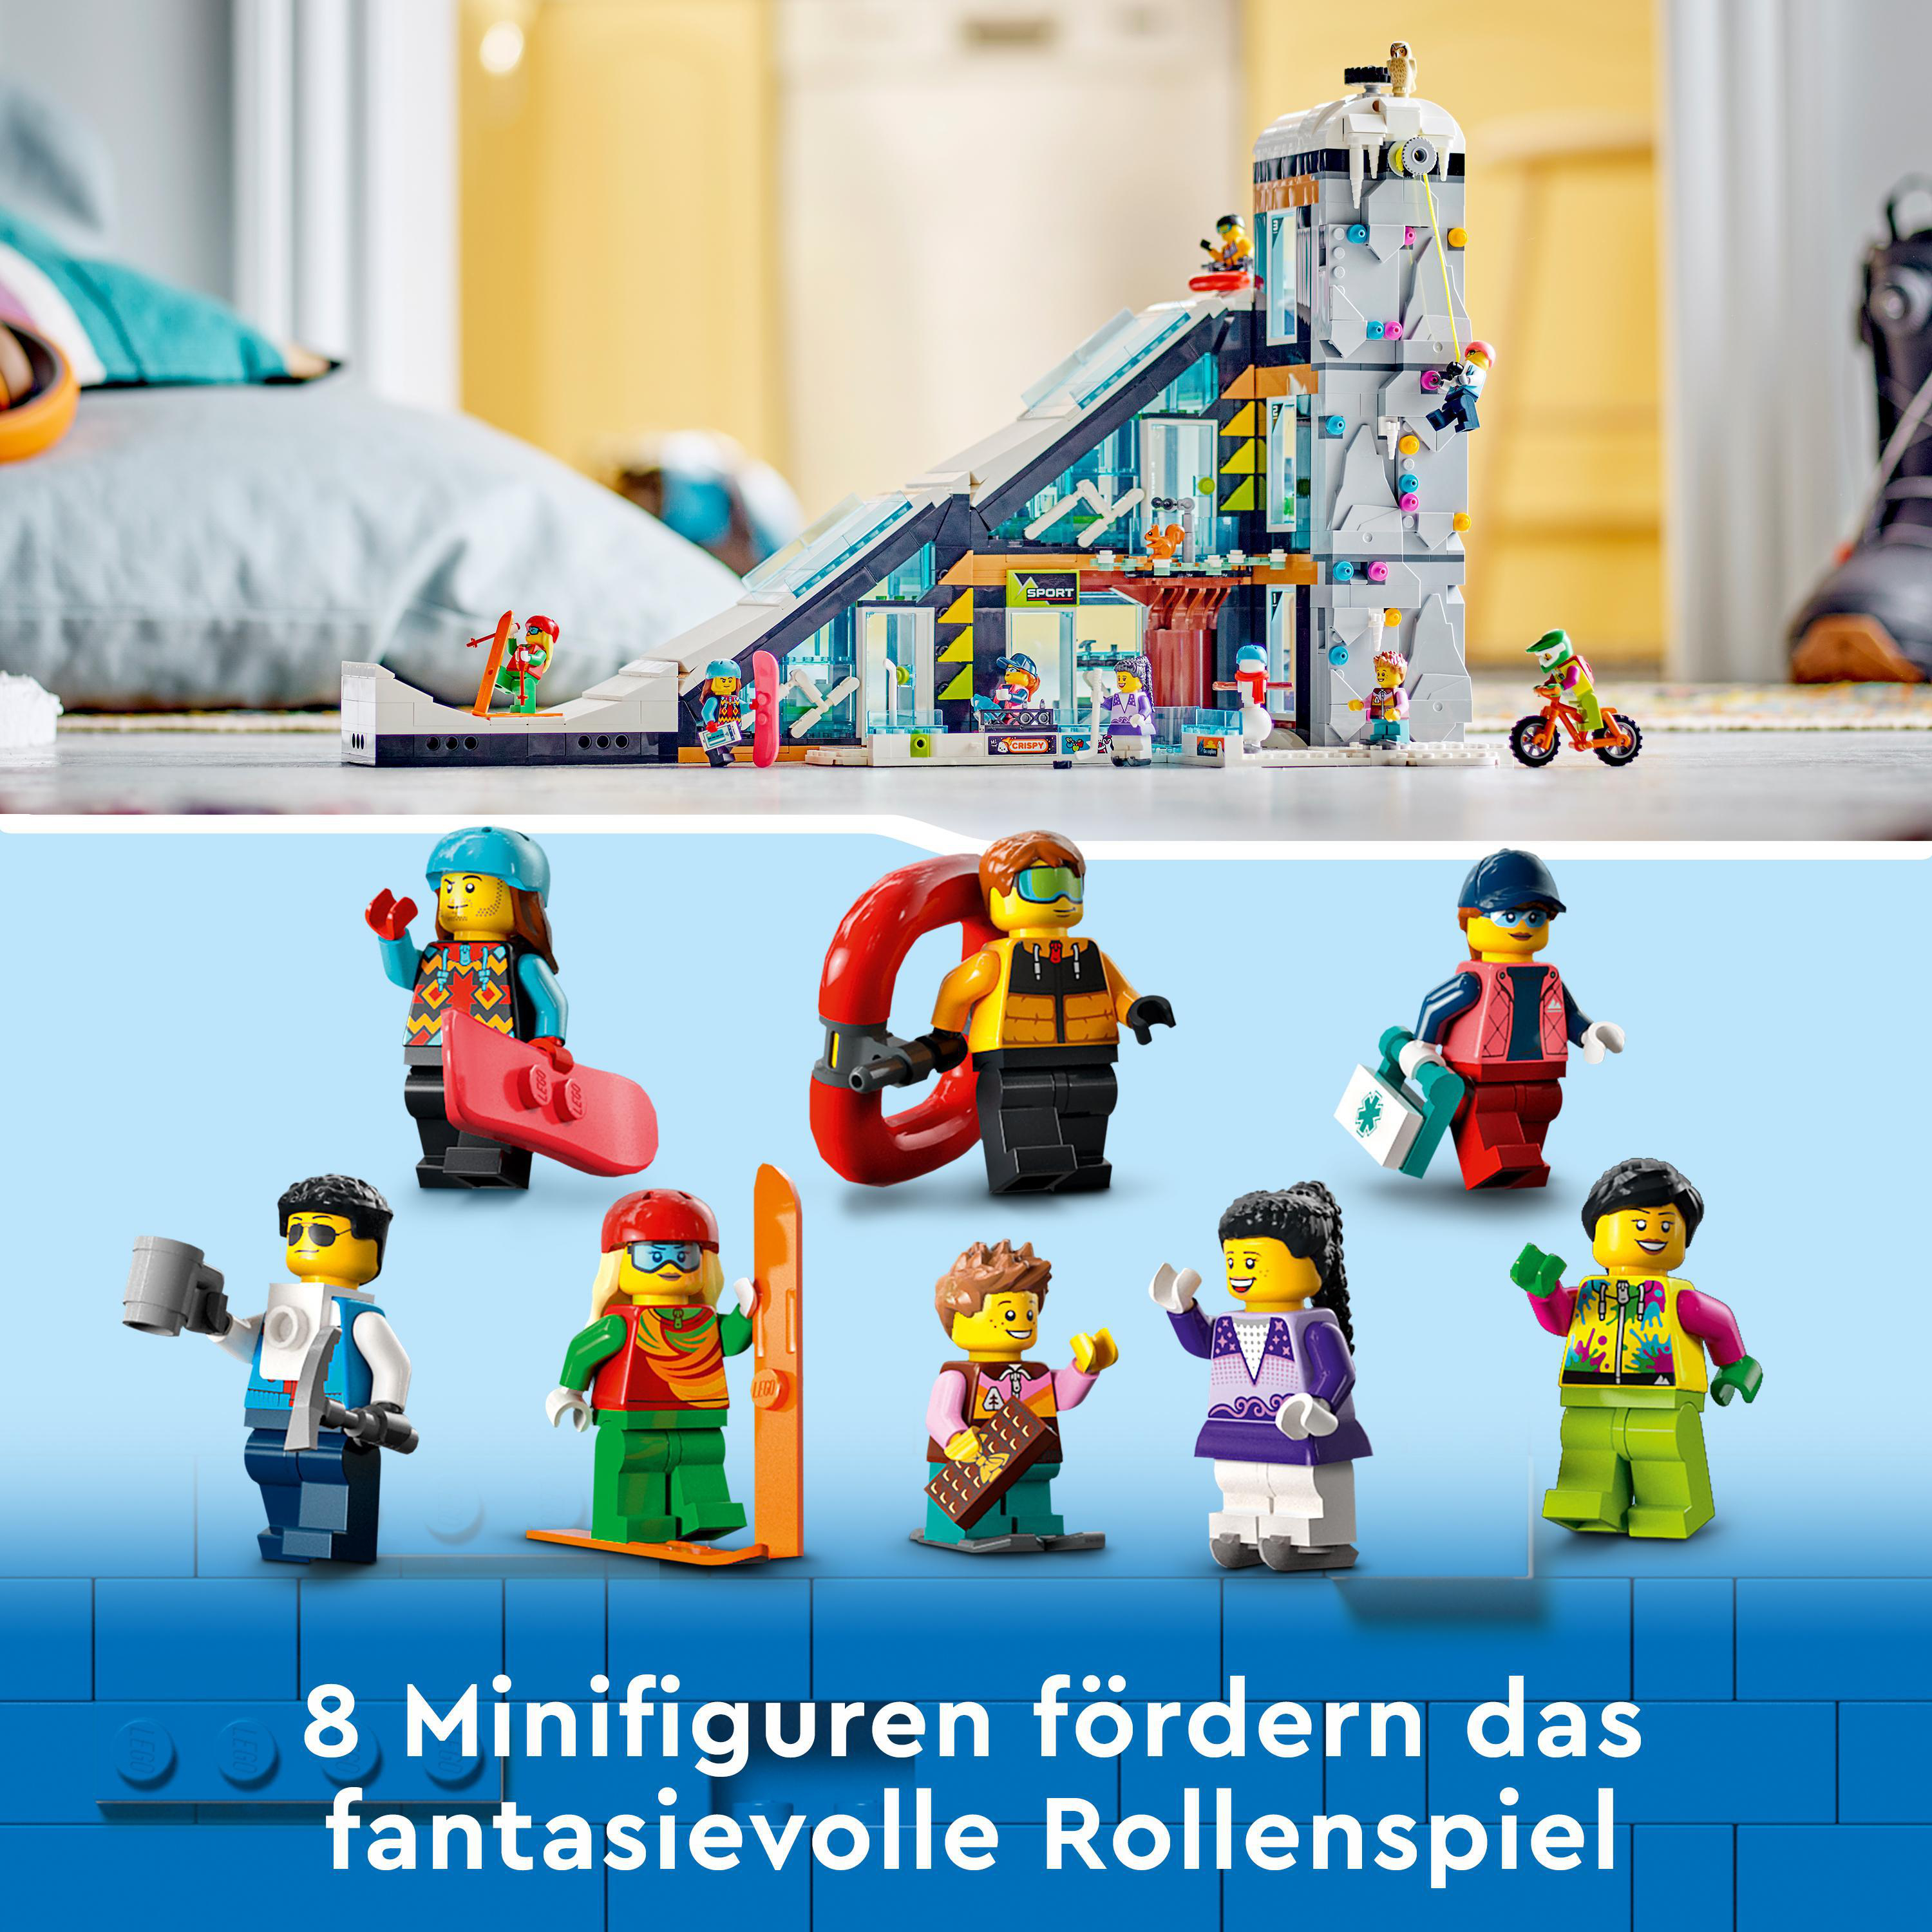 LEGO Bausatz, City 60366 Wintersportpark Mehrfarbig